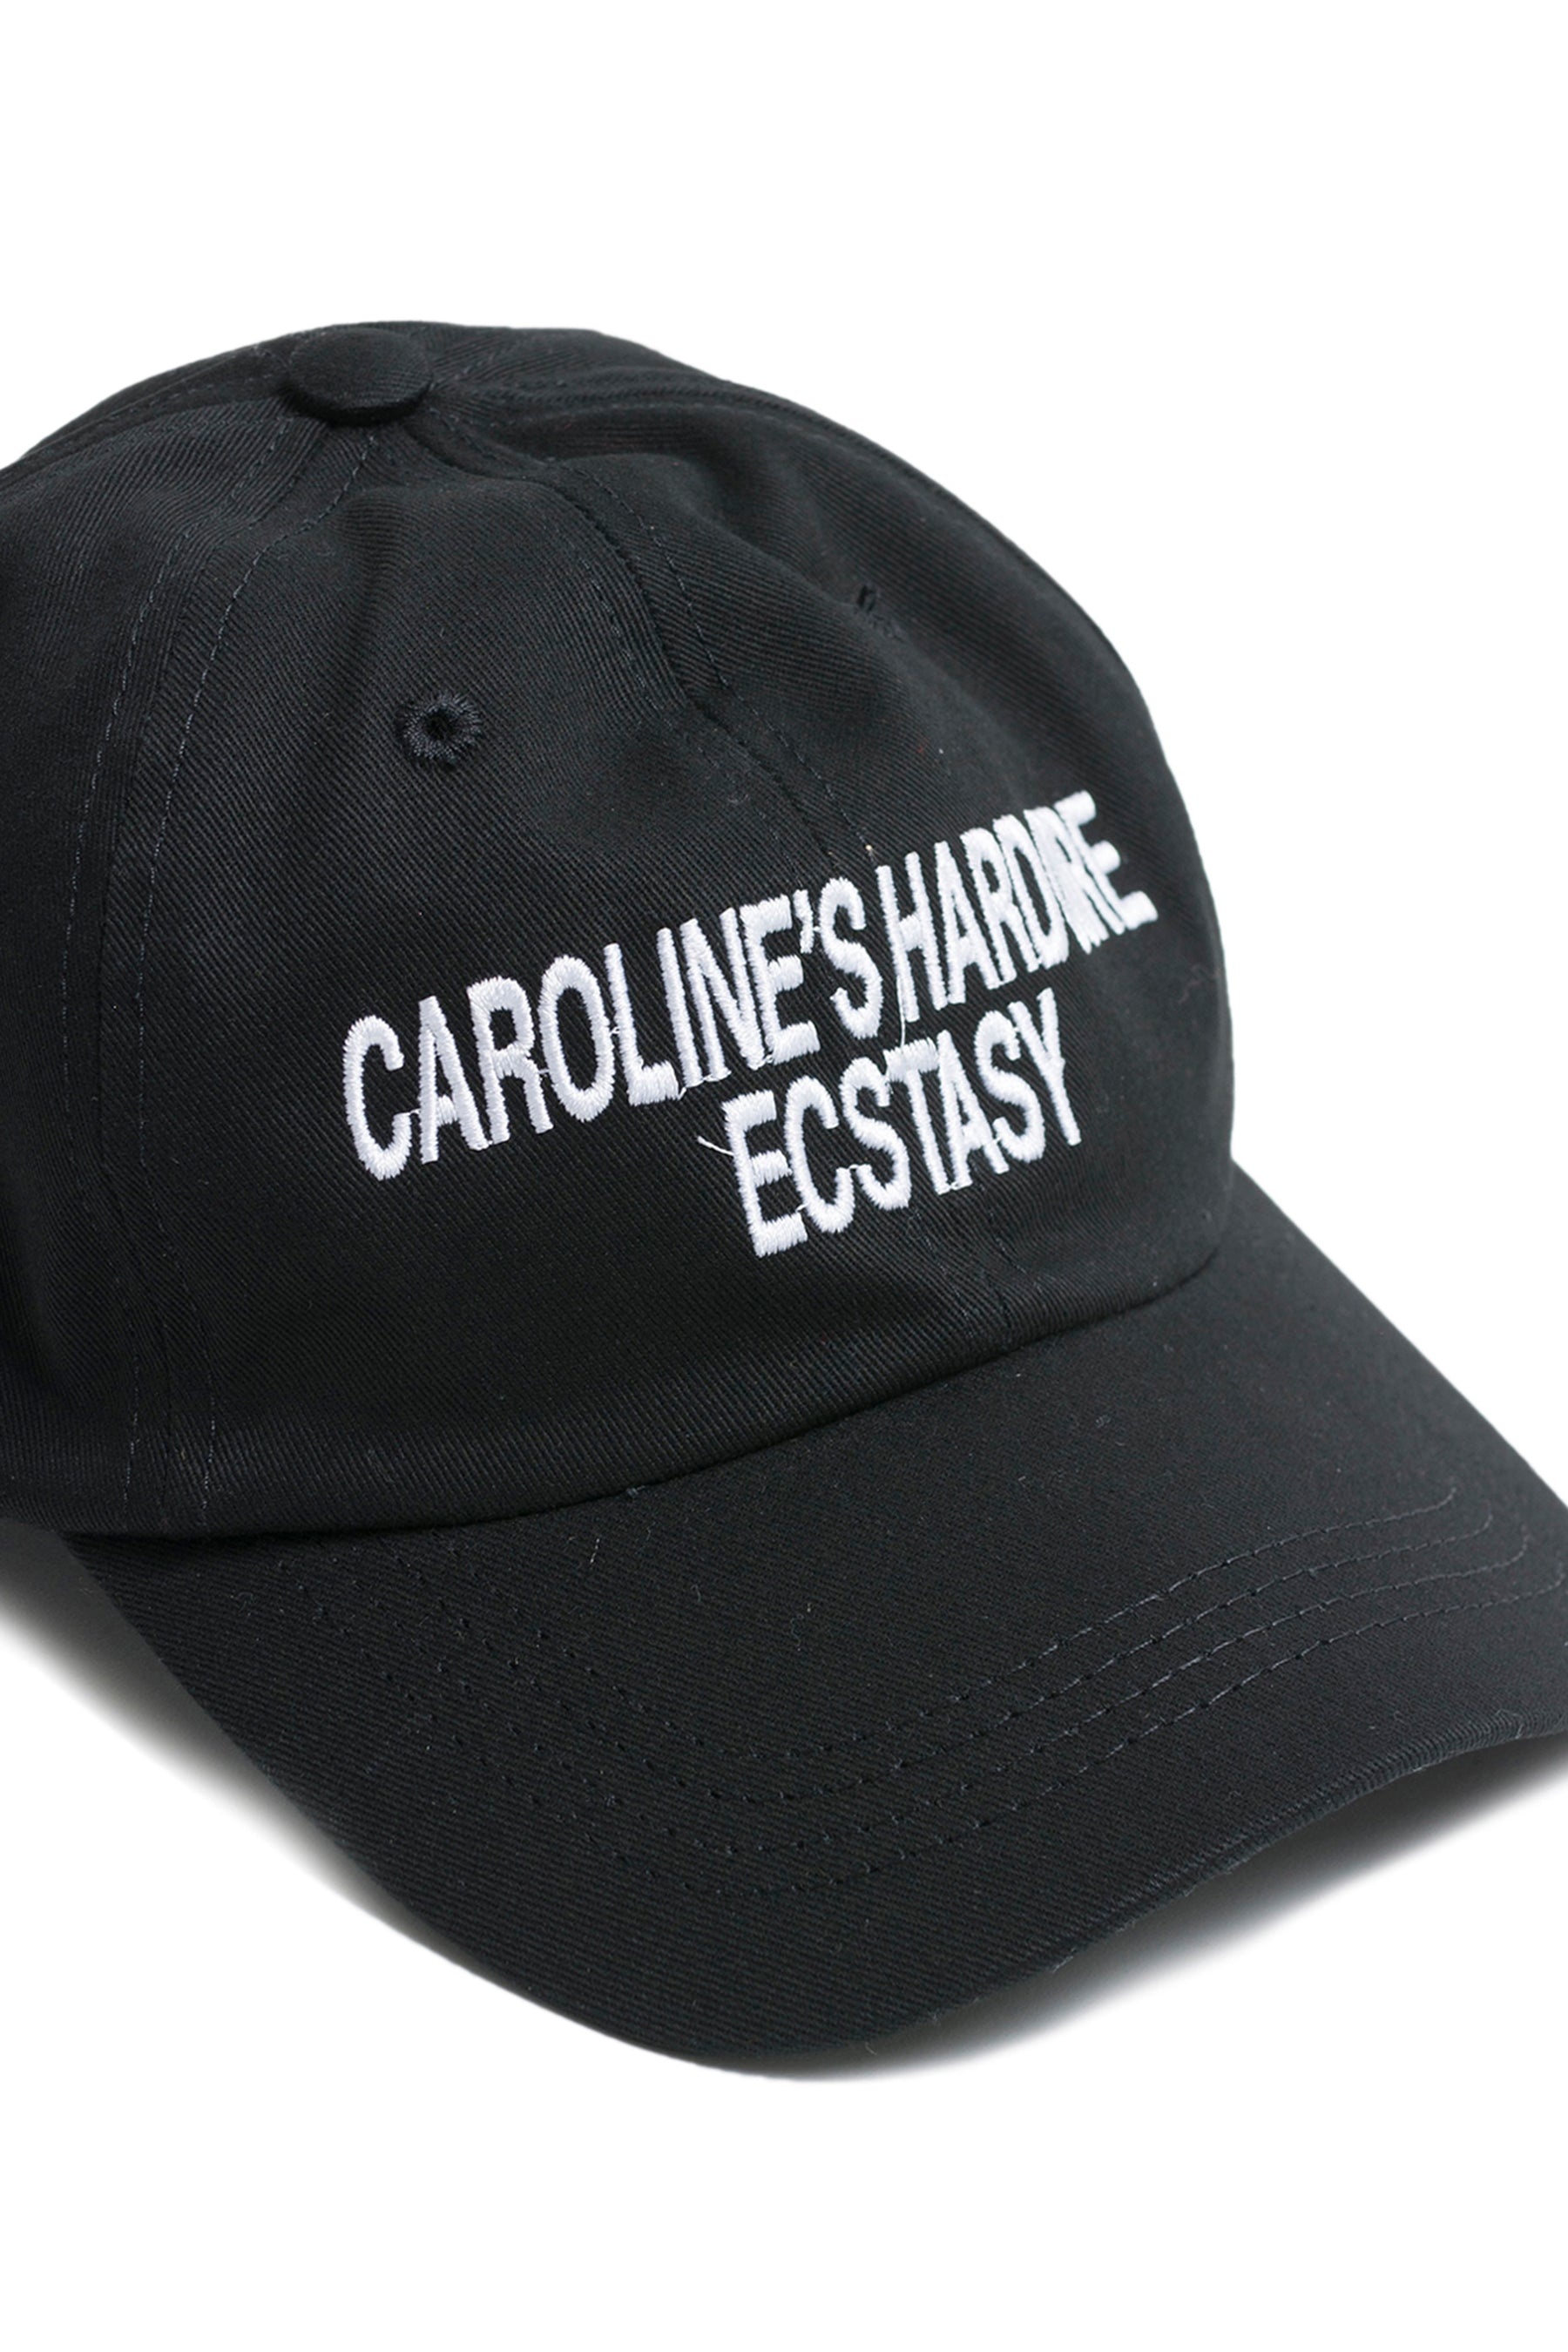 CAROLINE'S HARDCORE ECSTTASY 6-PANEL HAT / BLK/WHT - 5